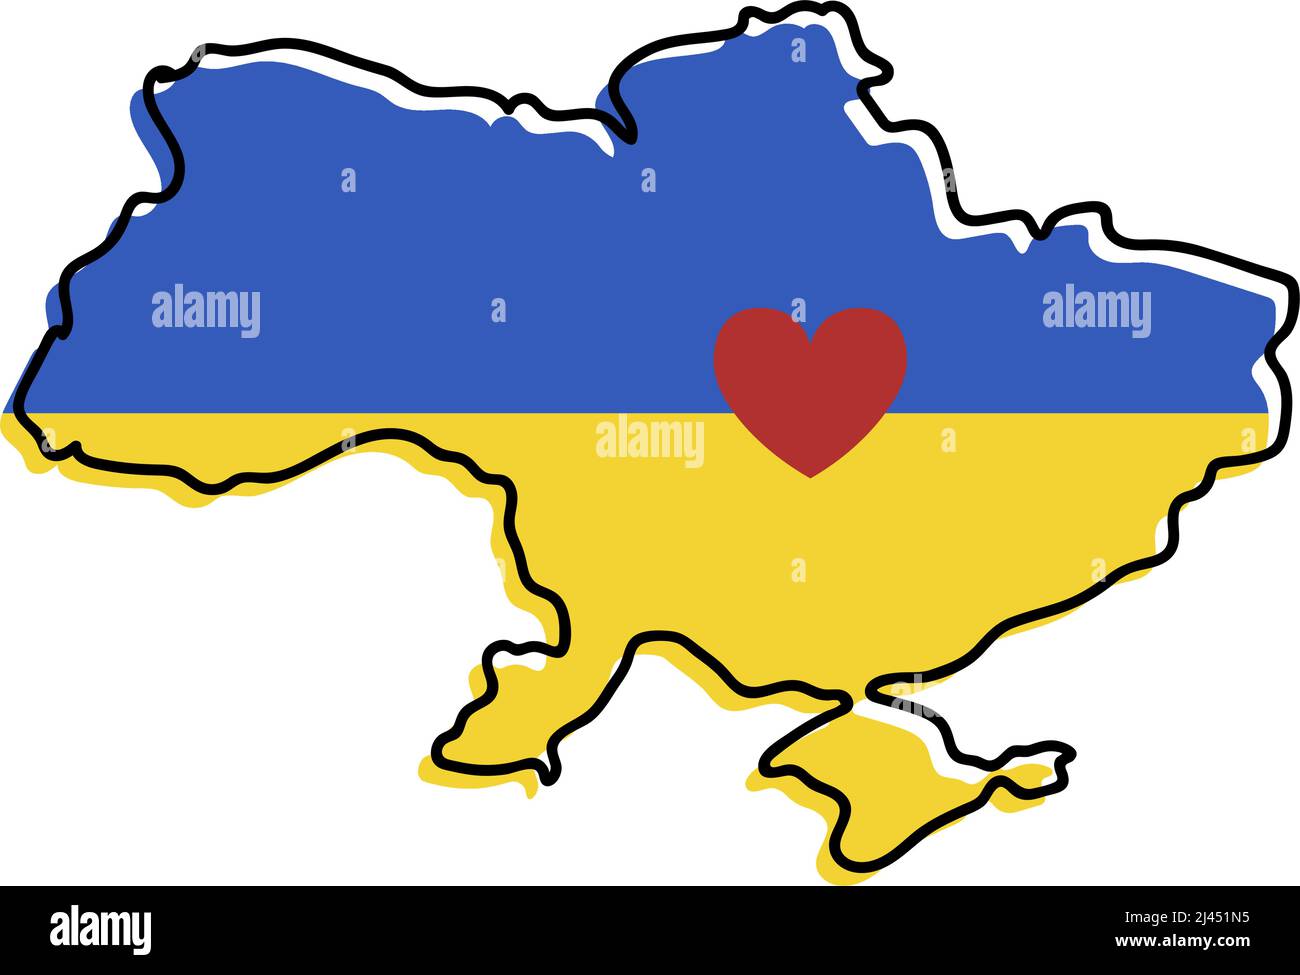 Stop War in Ukraine concept vector illustration. Heart, love for Ukraine, Ukrainian flag and map illustration. Save Ukraine from Russia. Stock Vector